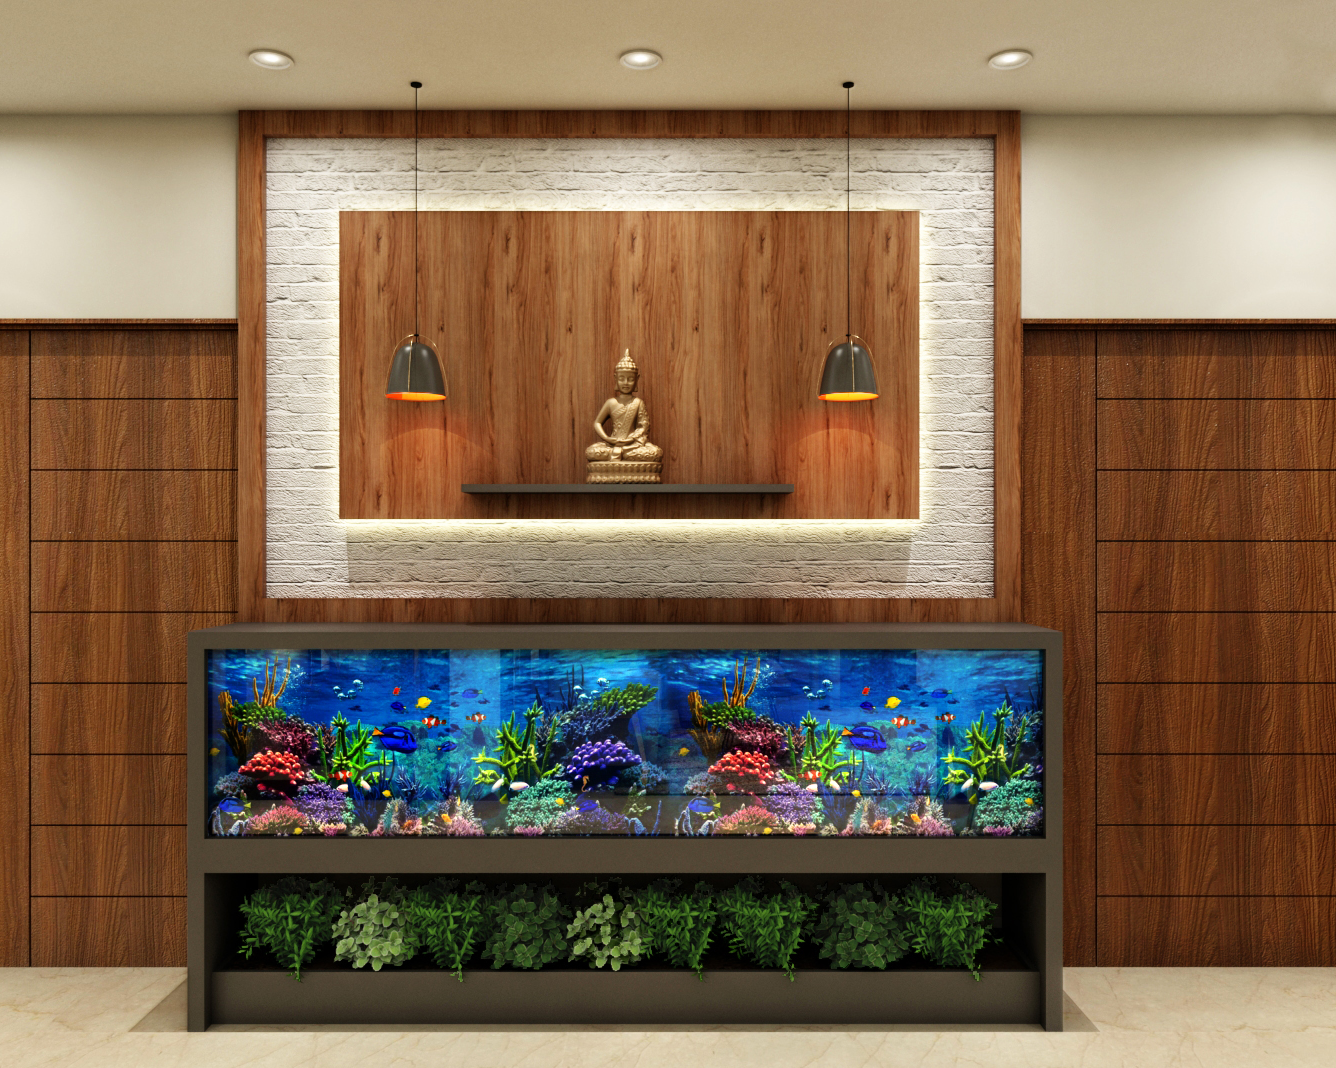 Contemporary Foyer Design With Aquarium and Buddha Idol